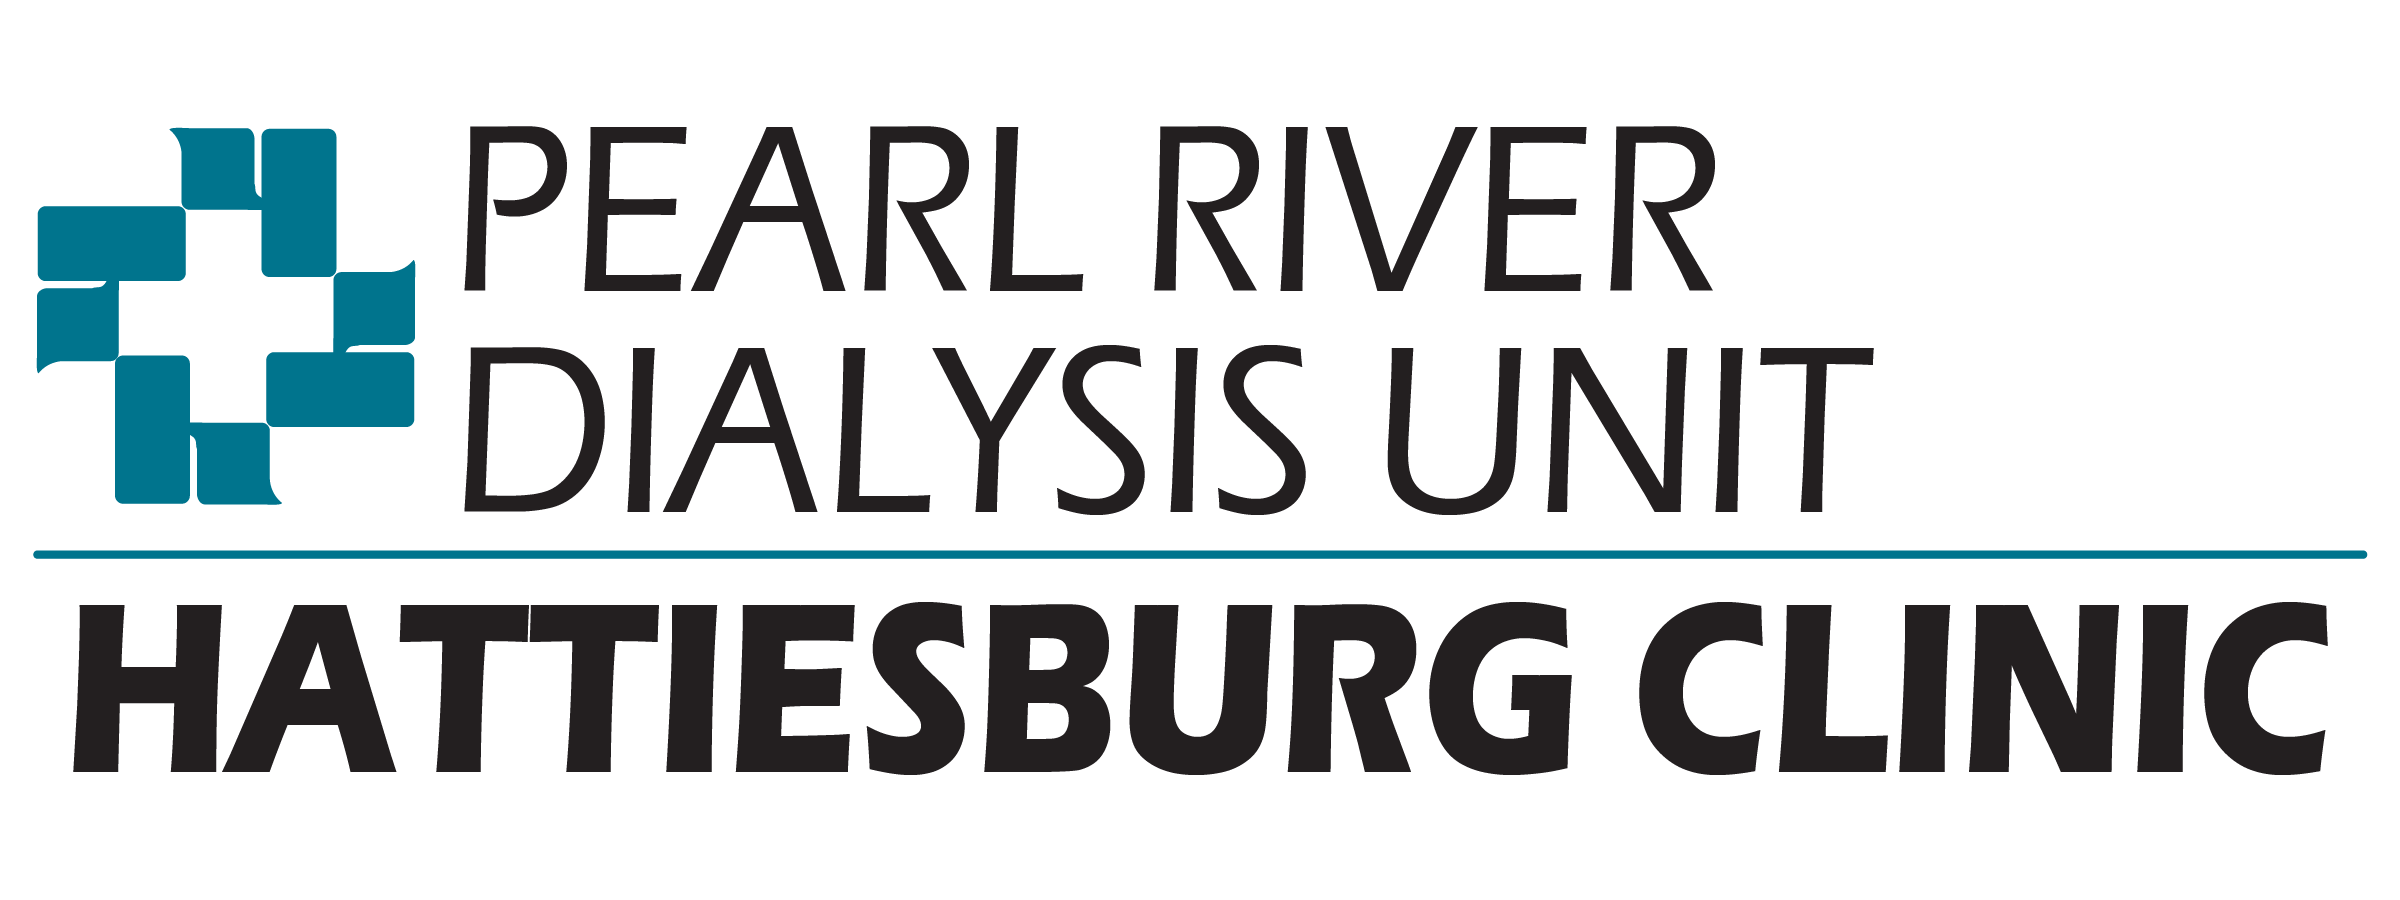 Pearl River Dialysis Unit logo